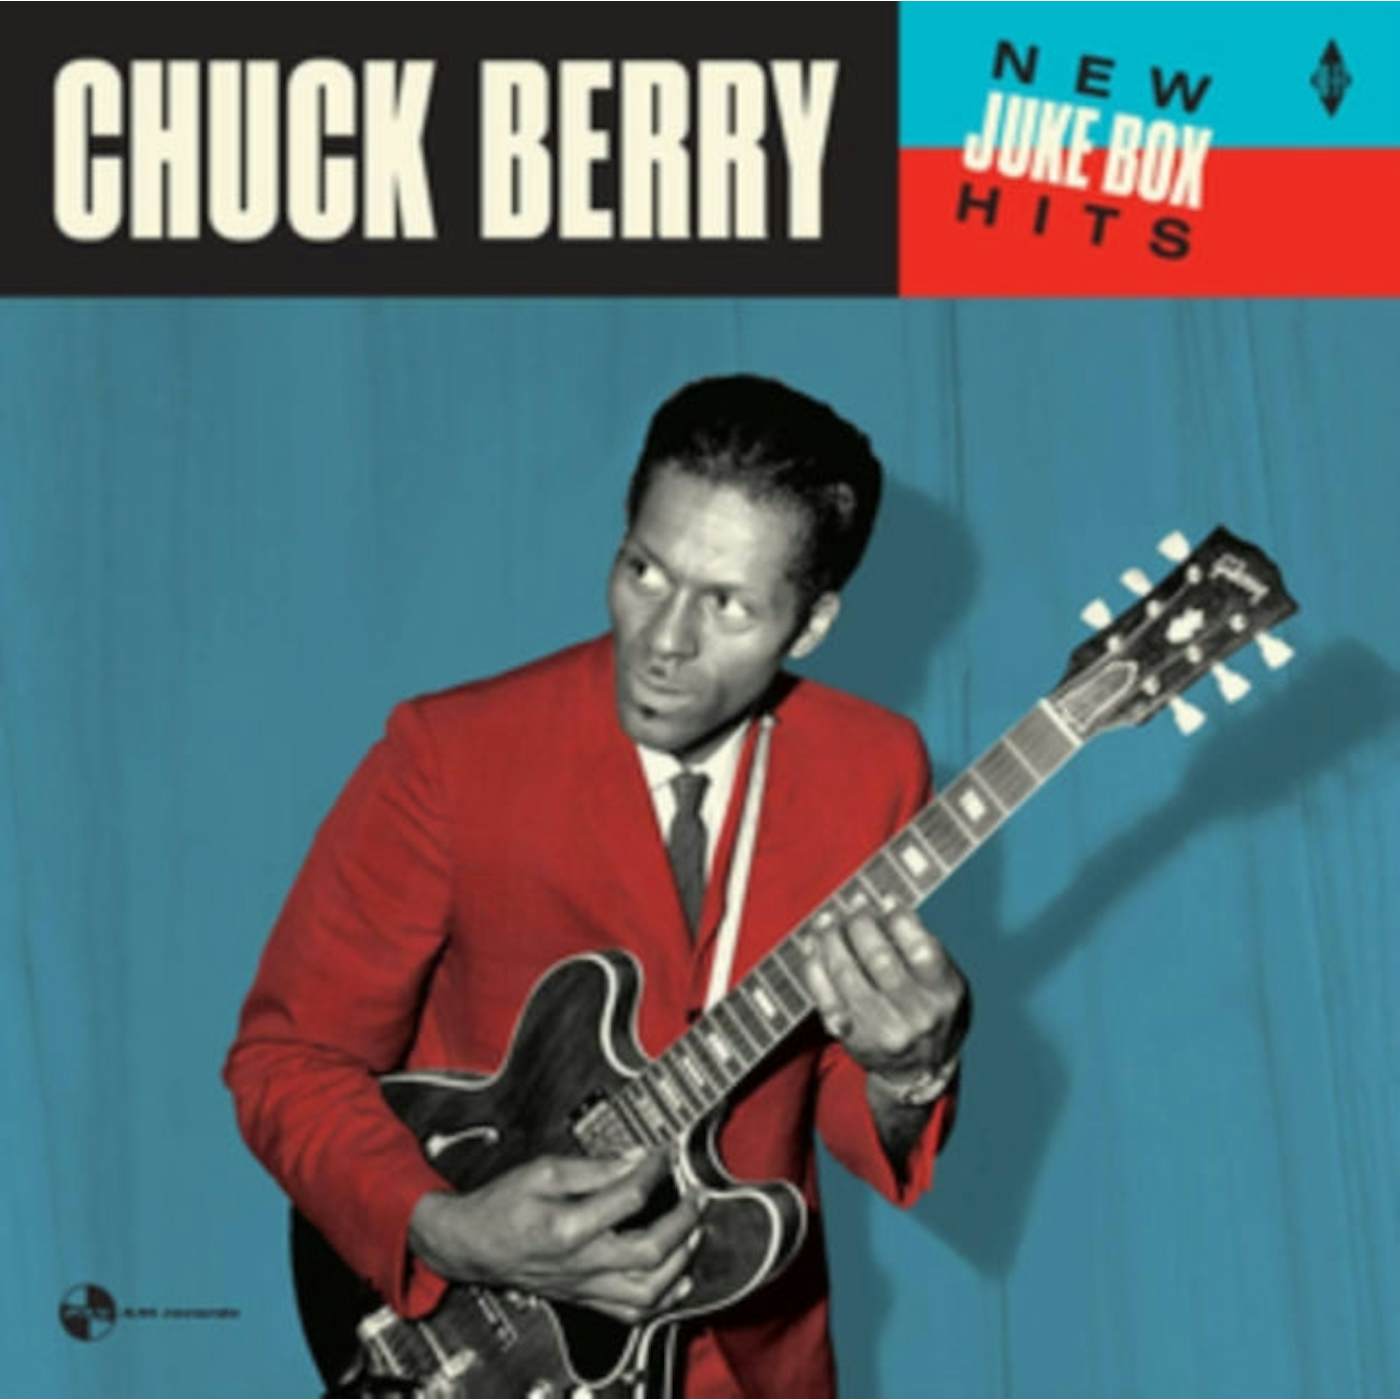 Chuck Berry LP - New Juke Box Hits (Vinyl)